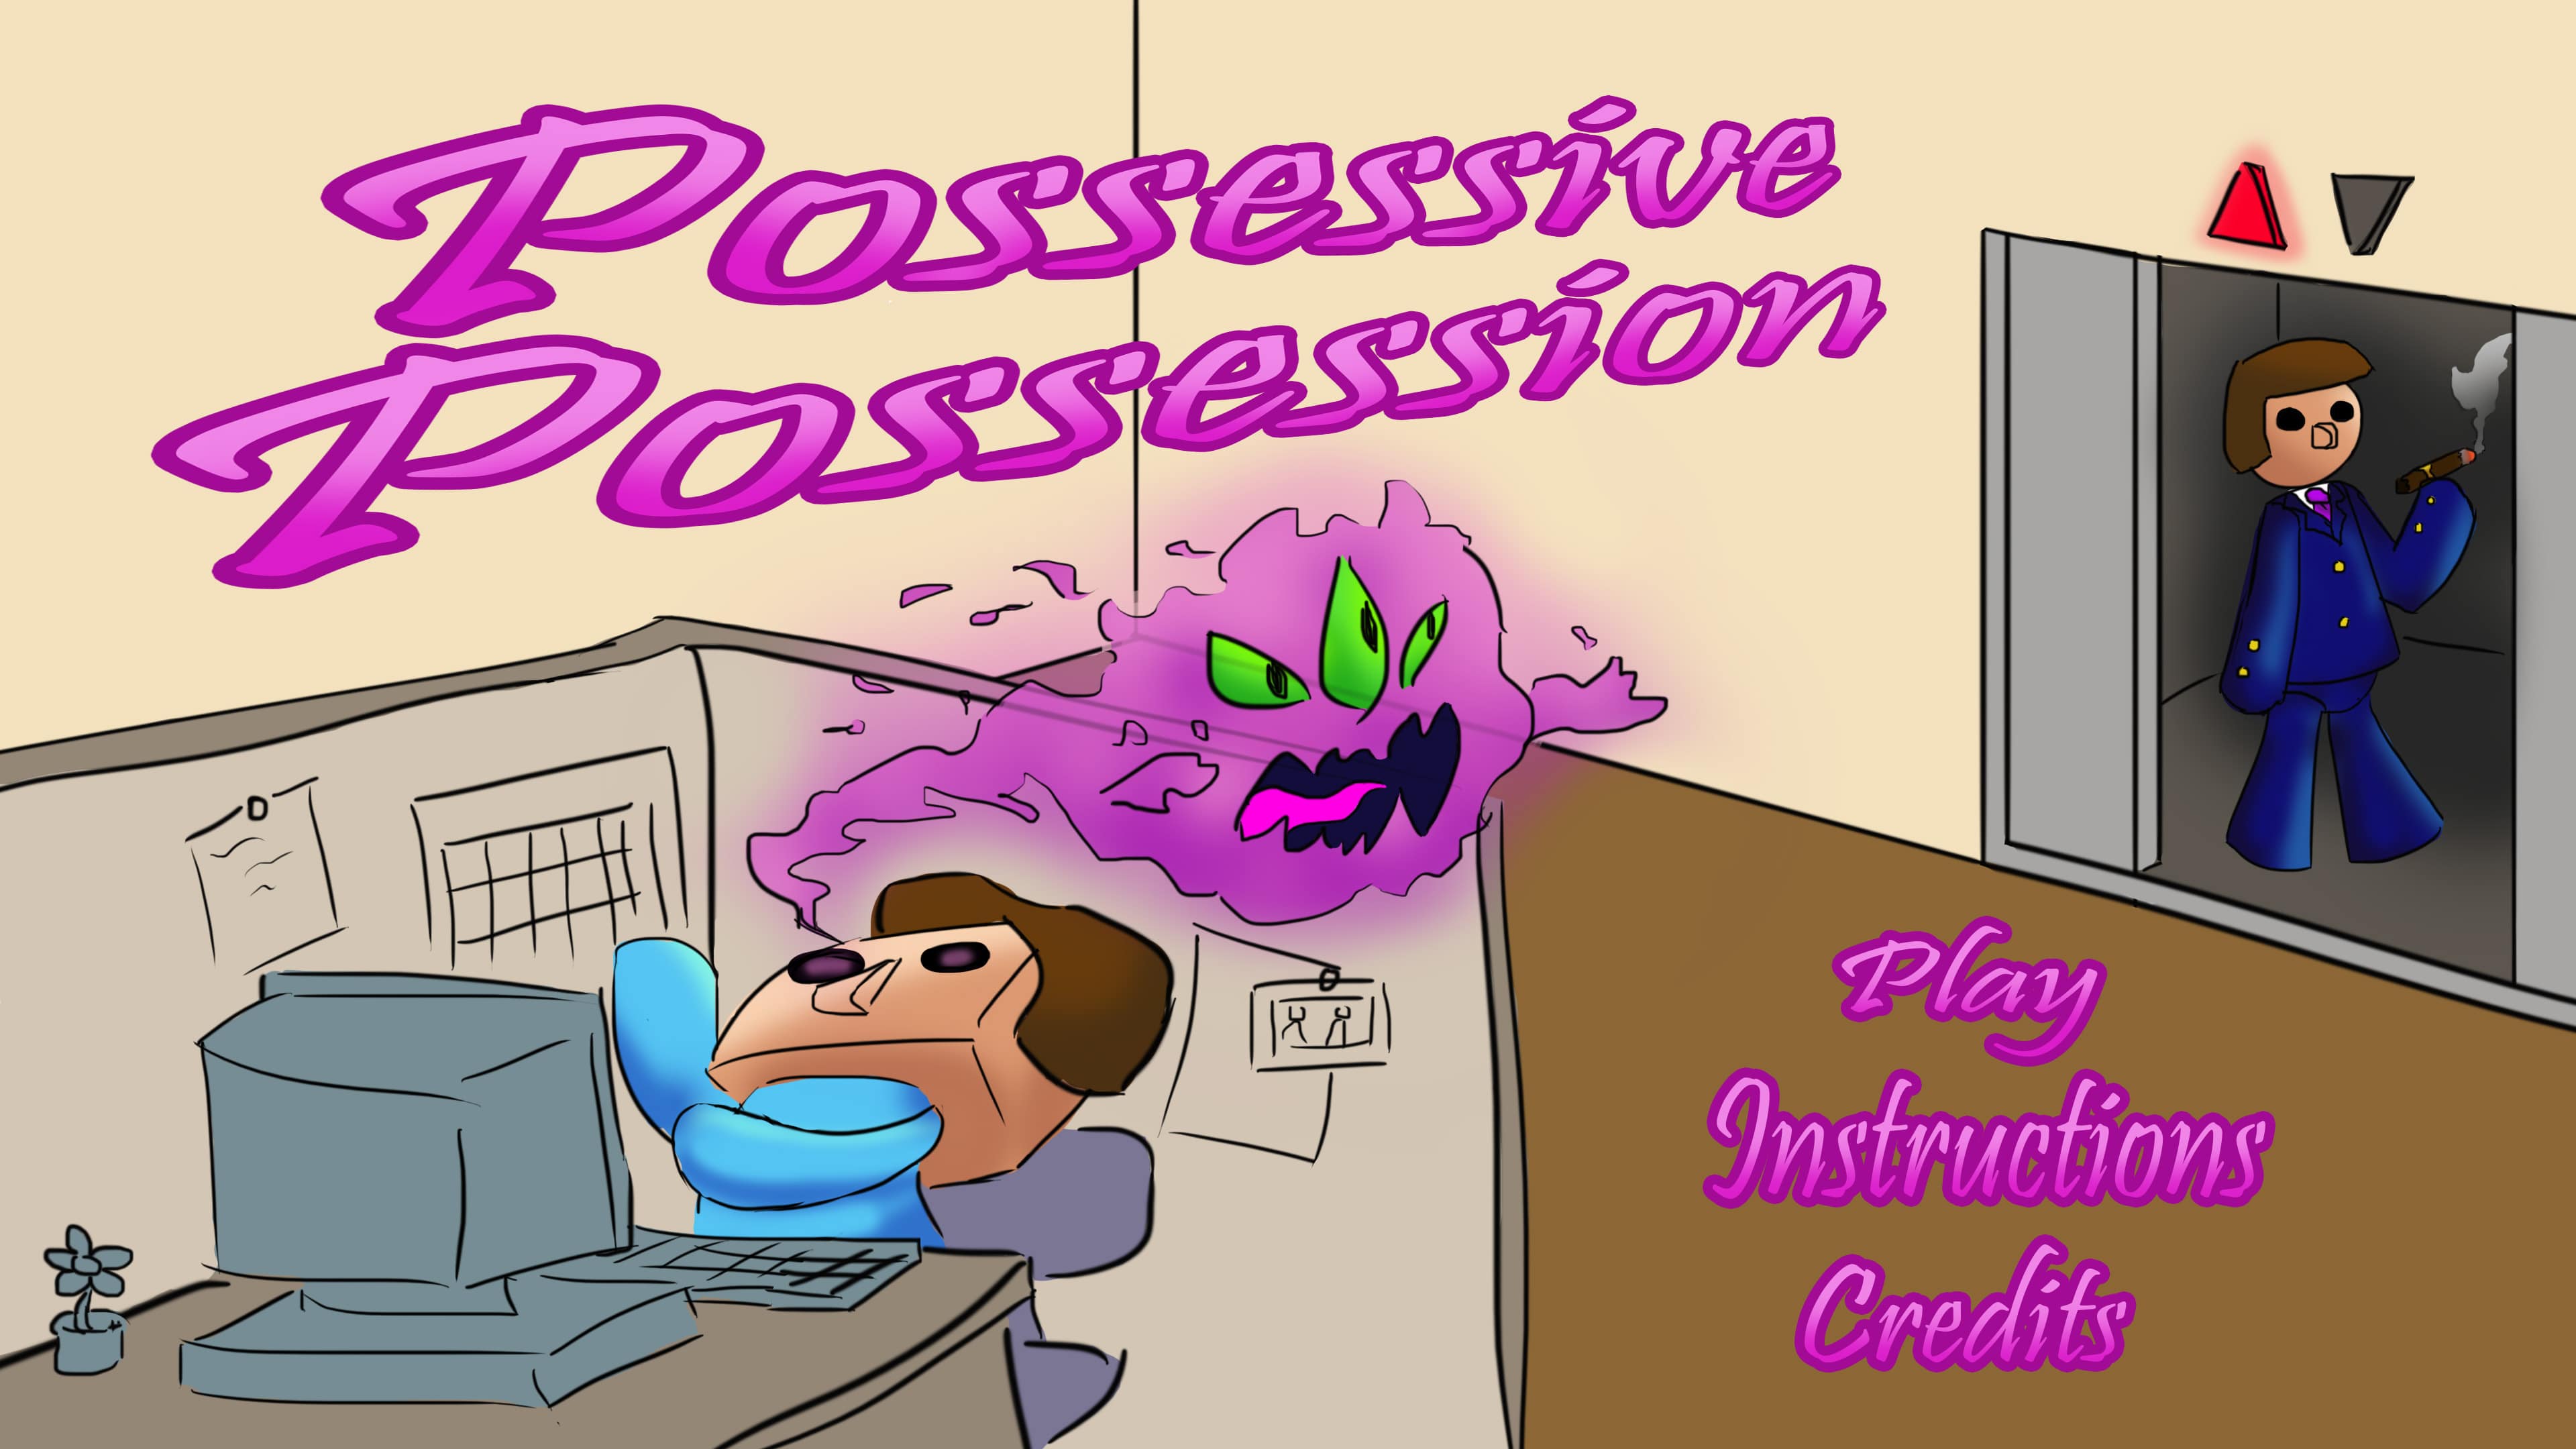 'description'Possessive Possession' was a game created for Chico State's Local Game Jam 2018